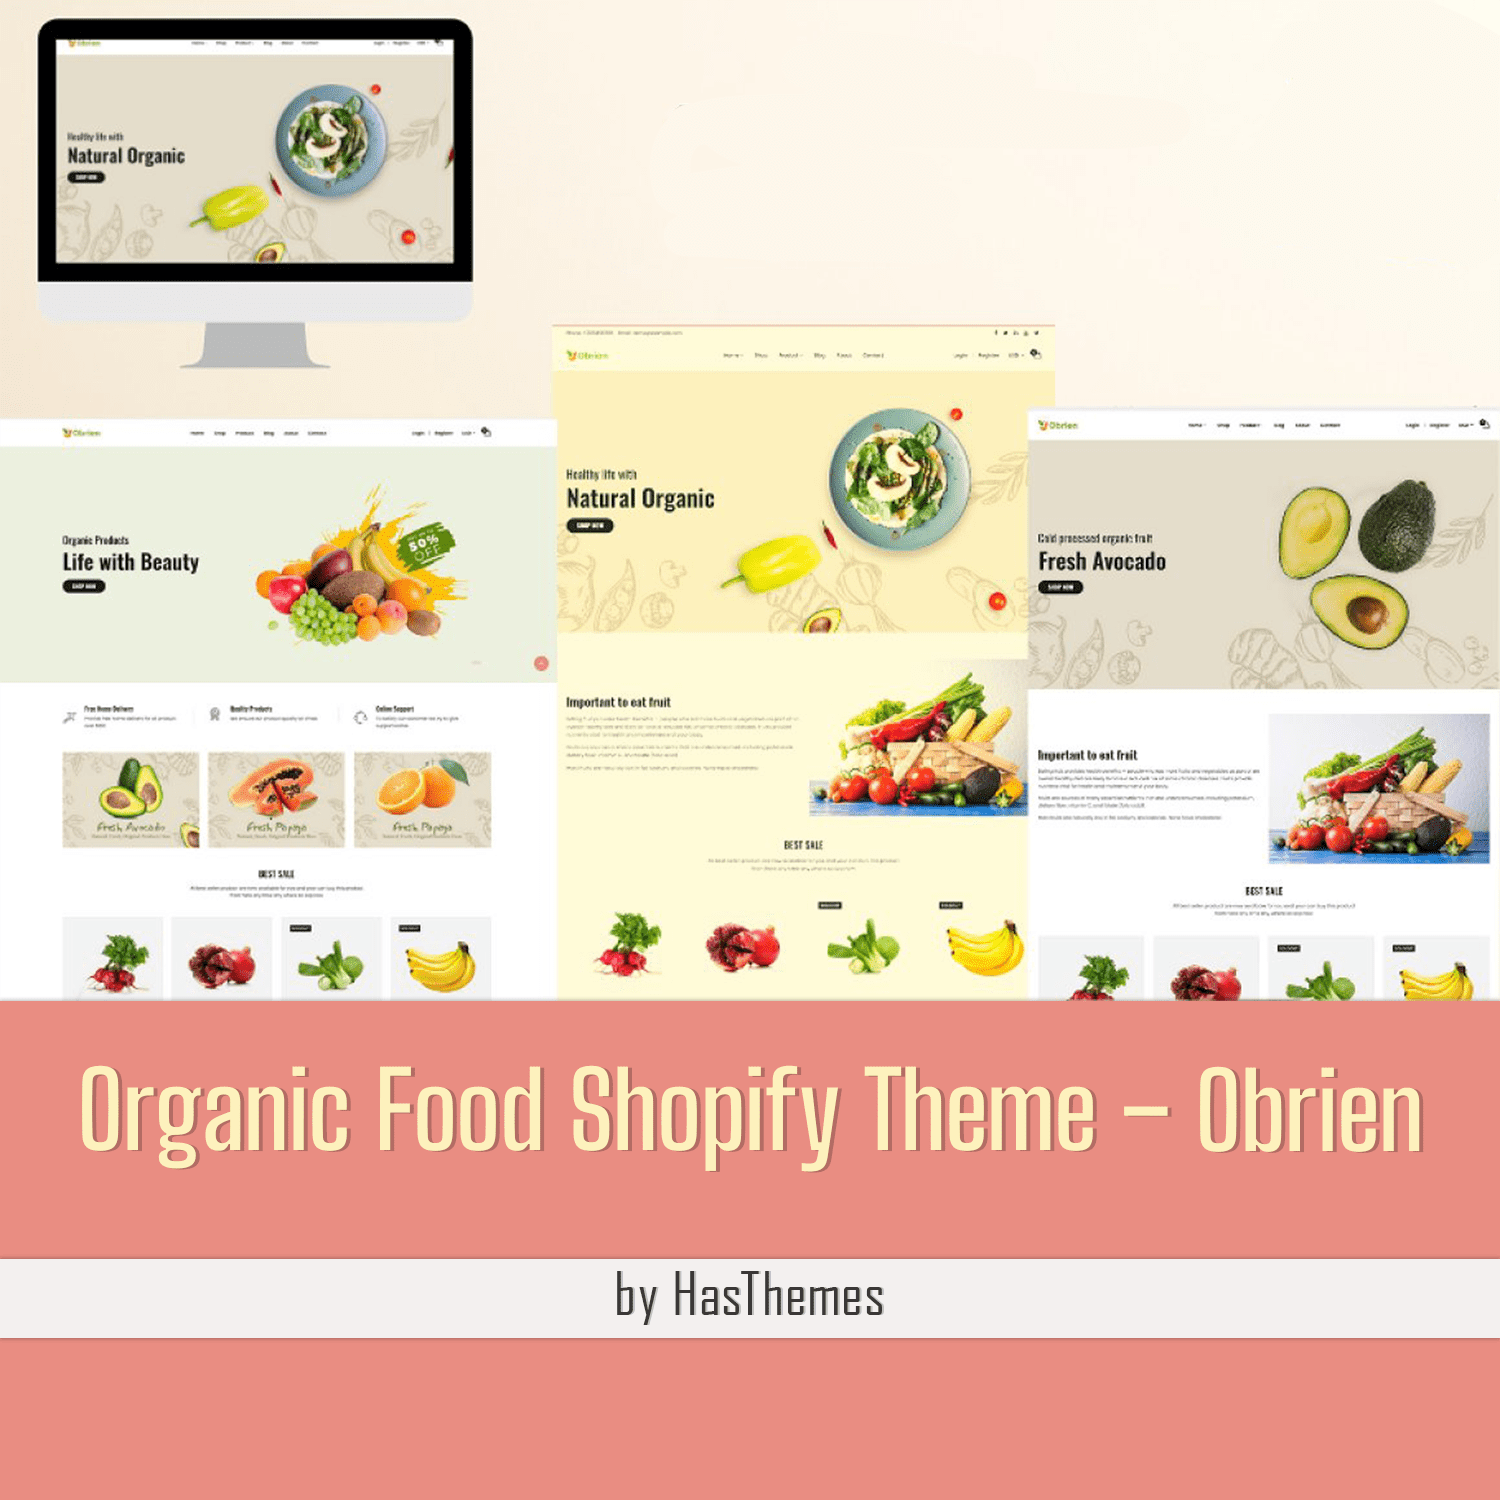 Fresh avocado of Organic Food Shopify Theme – Obrien.